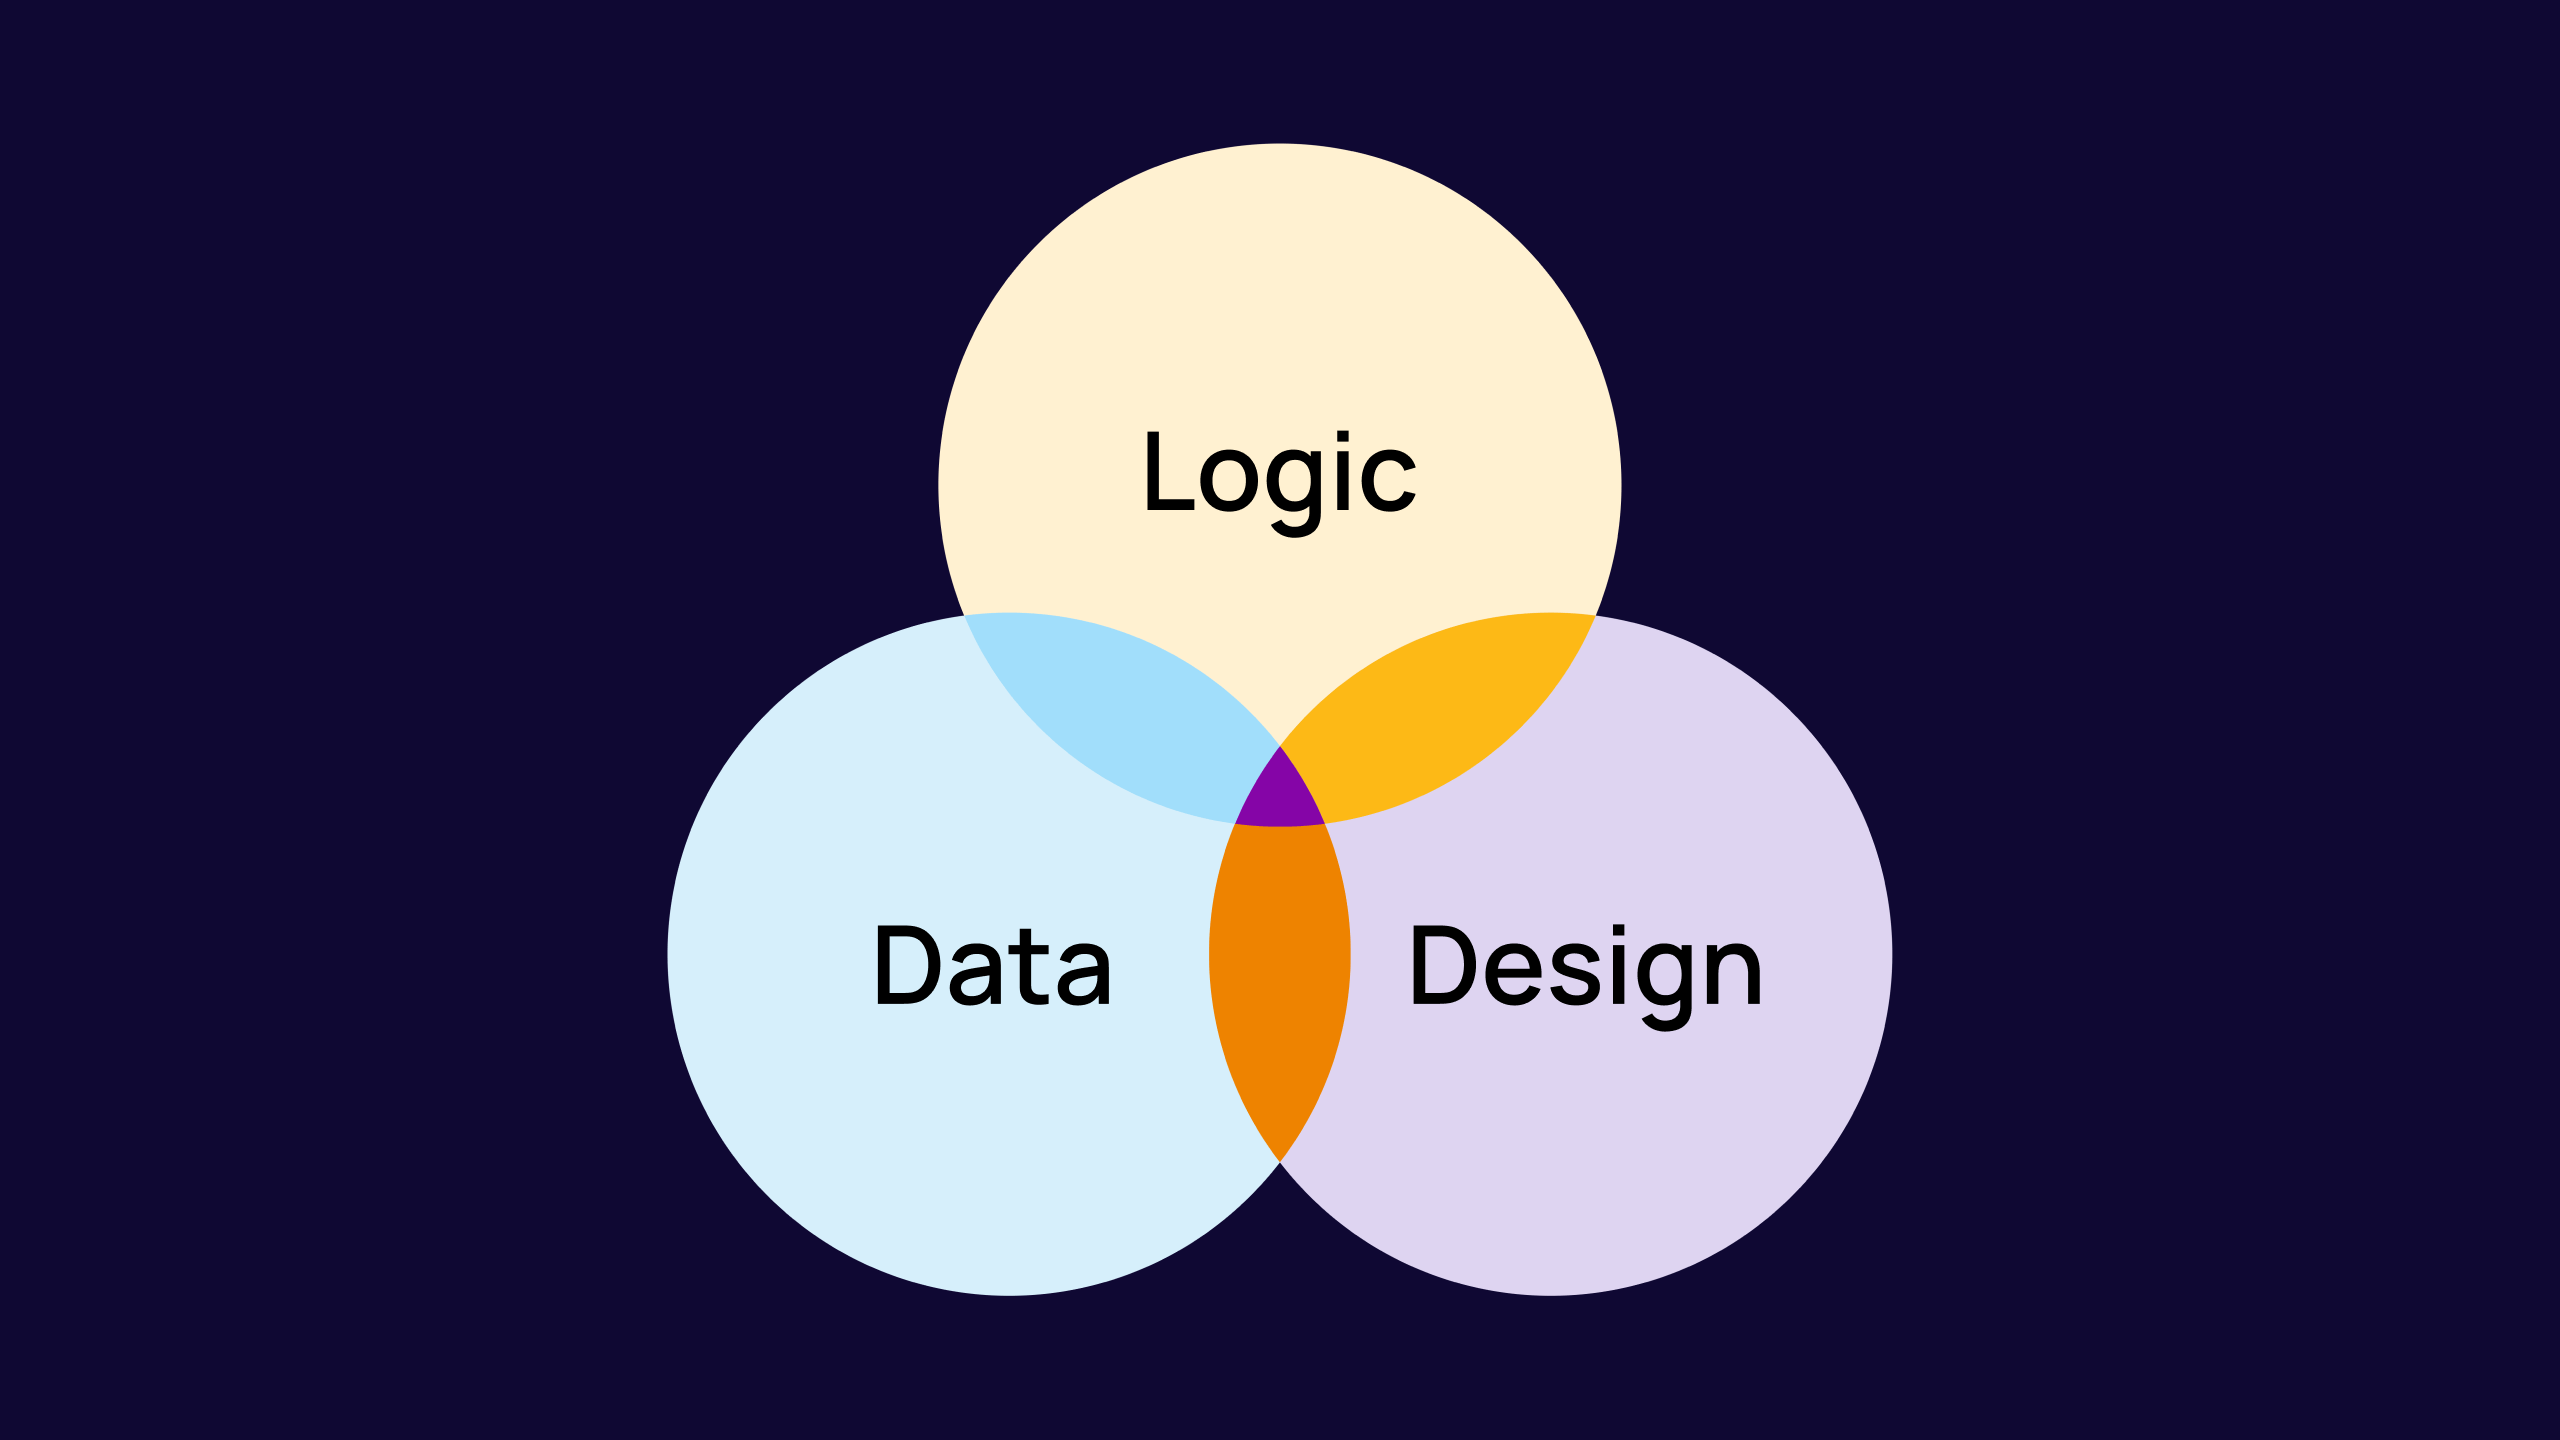 A three circle venn diagram with one word each: Data, Logic, and Design.